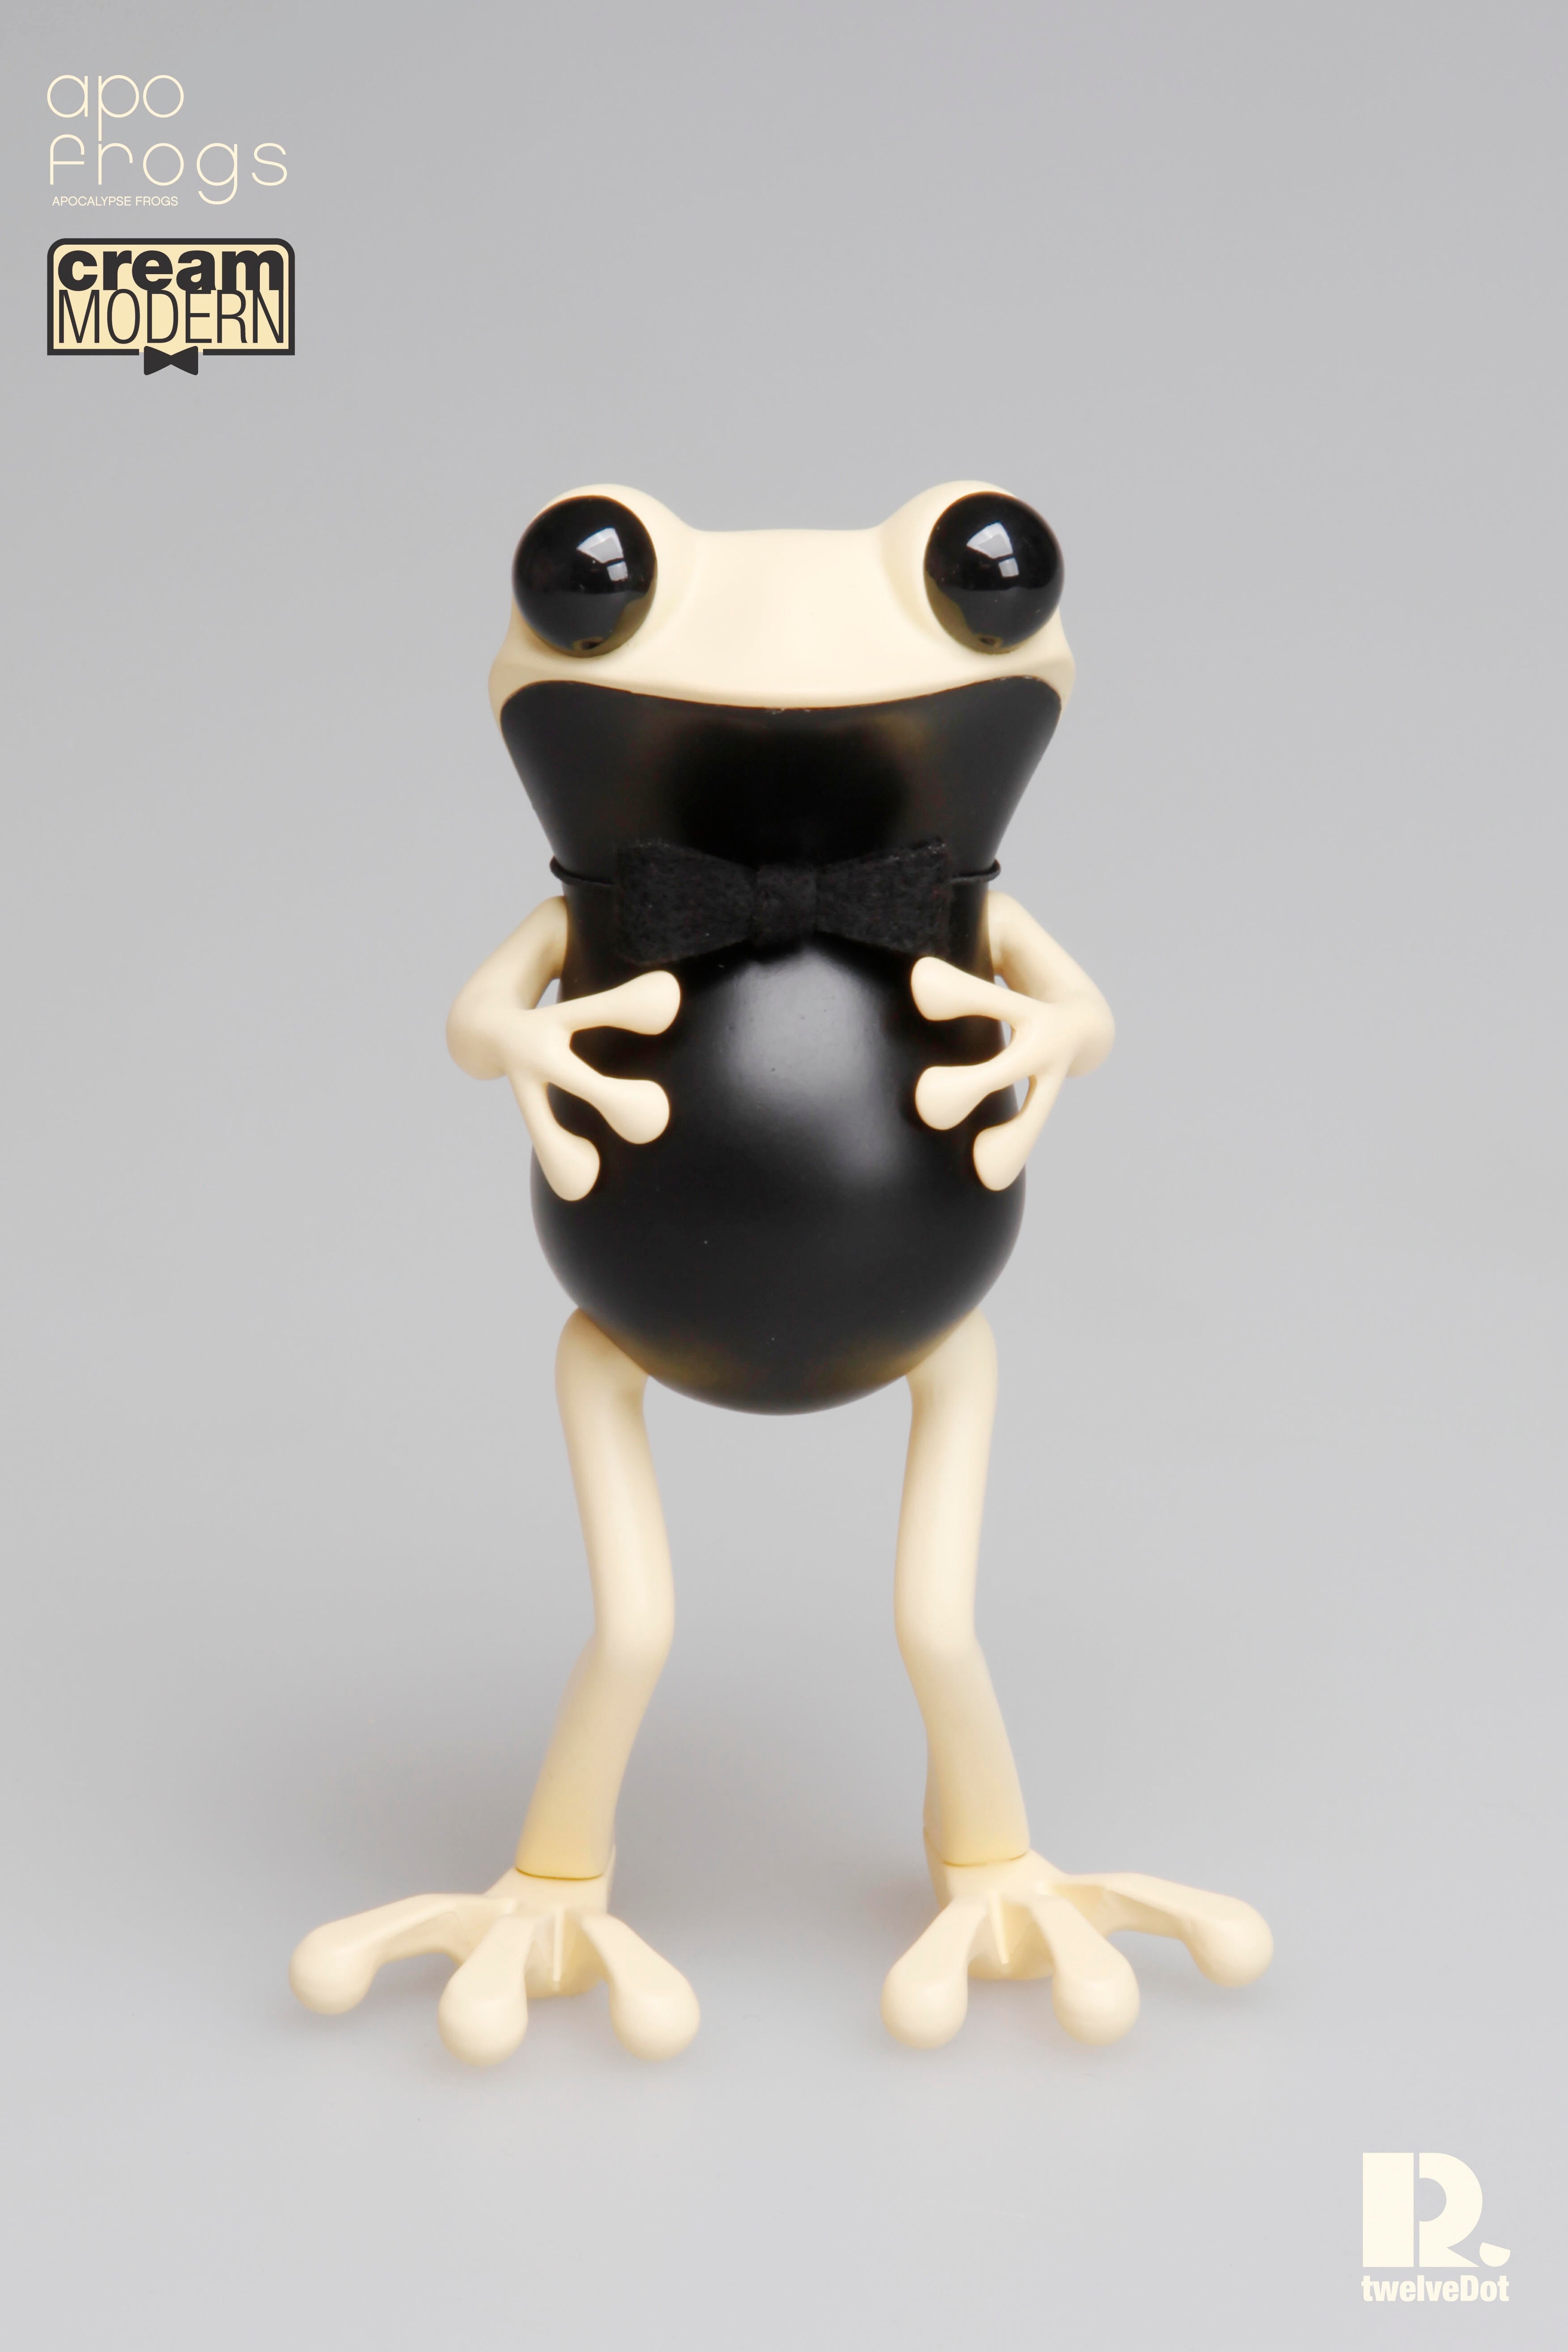 APO Frogs : Cream Modern by Twelvedot